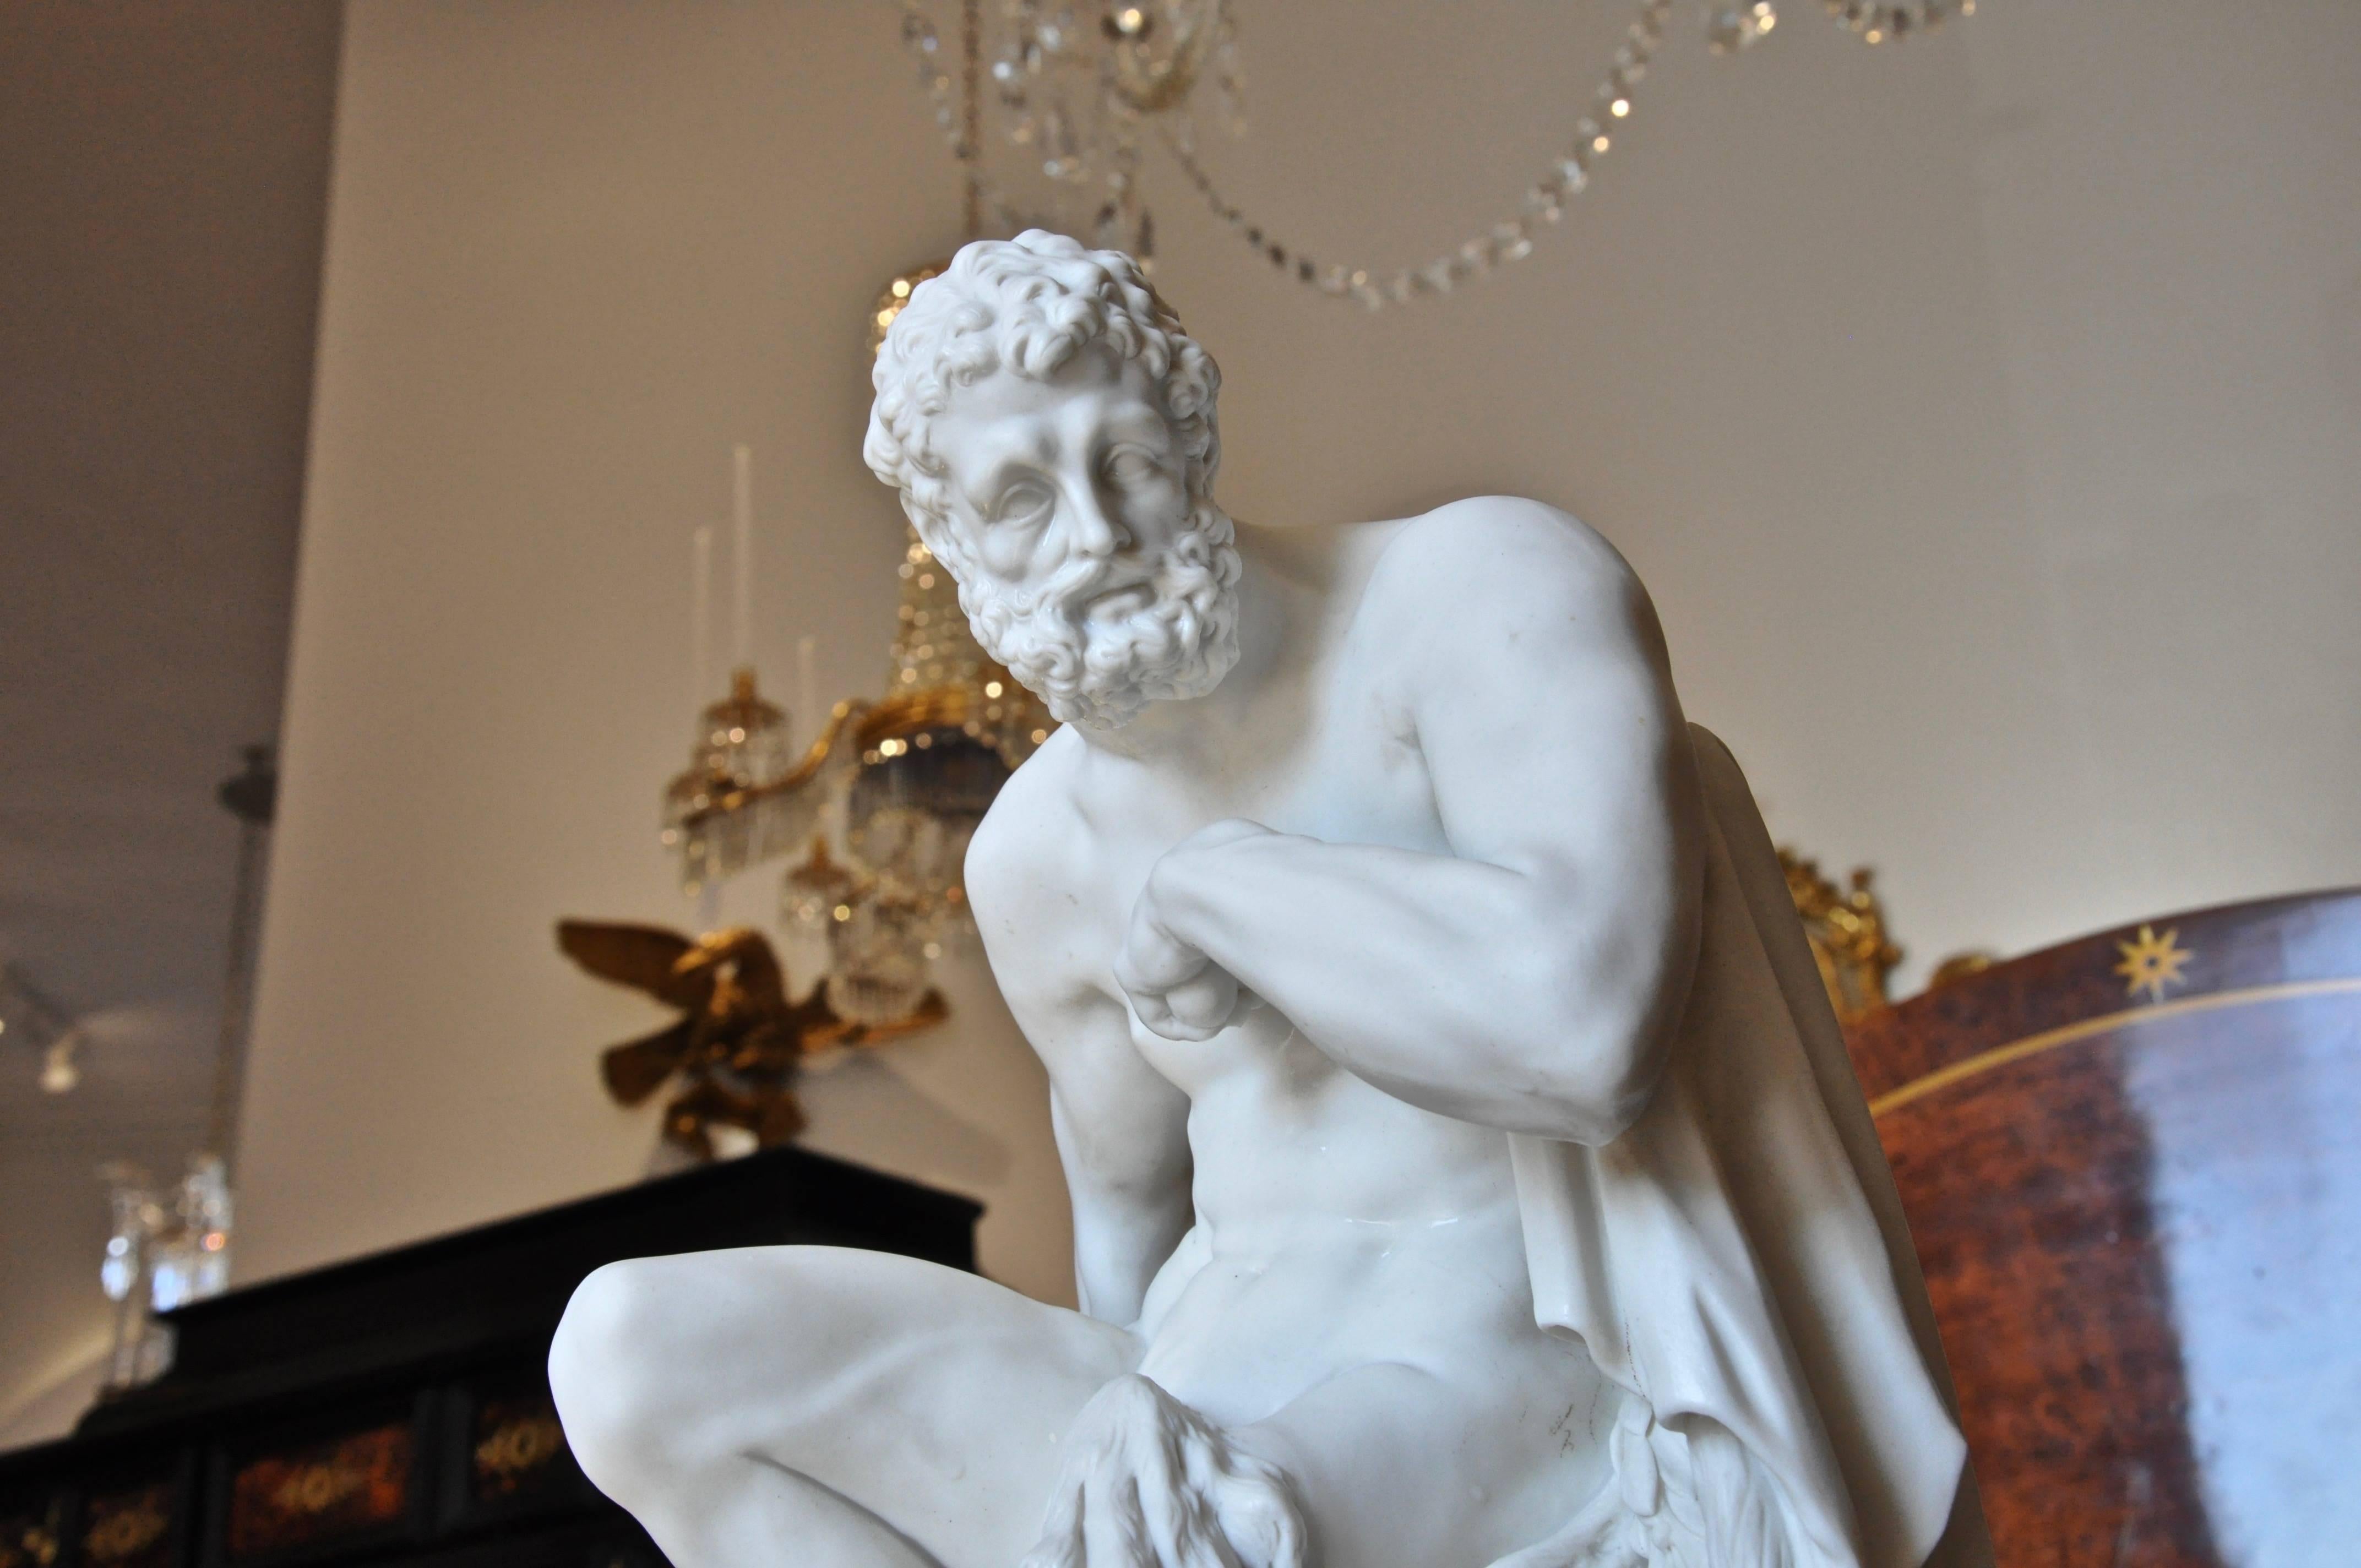 German Large 19th Century Berlin Bisque or Parian Porcelain Figure of Hercules